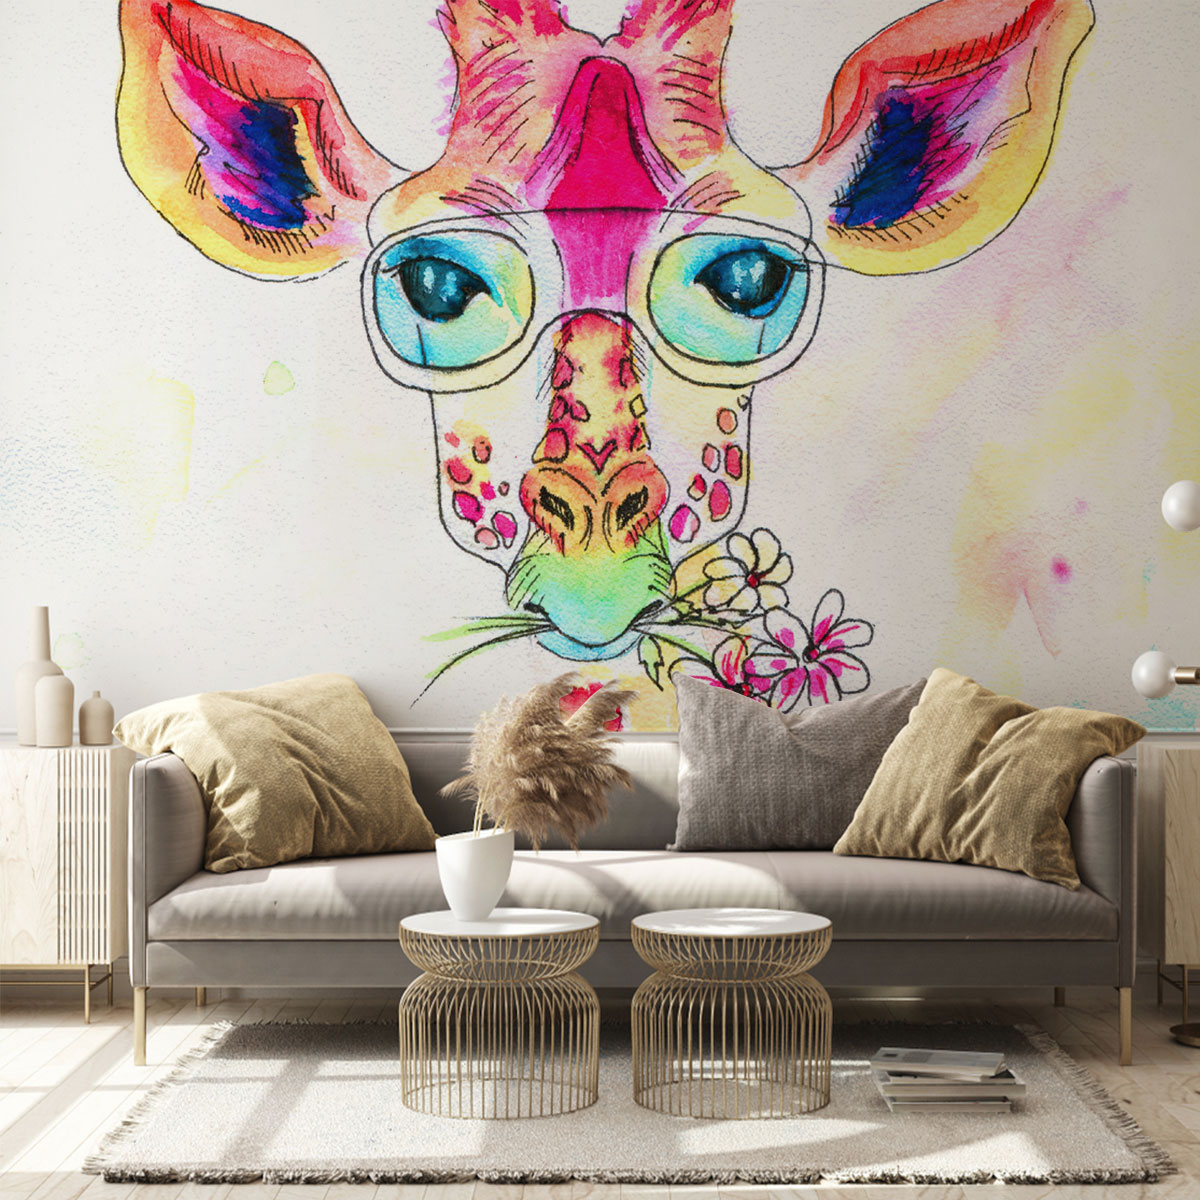 Watercolor Giraffe Wall Mural_1_2.1